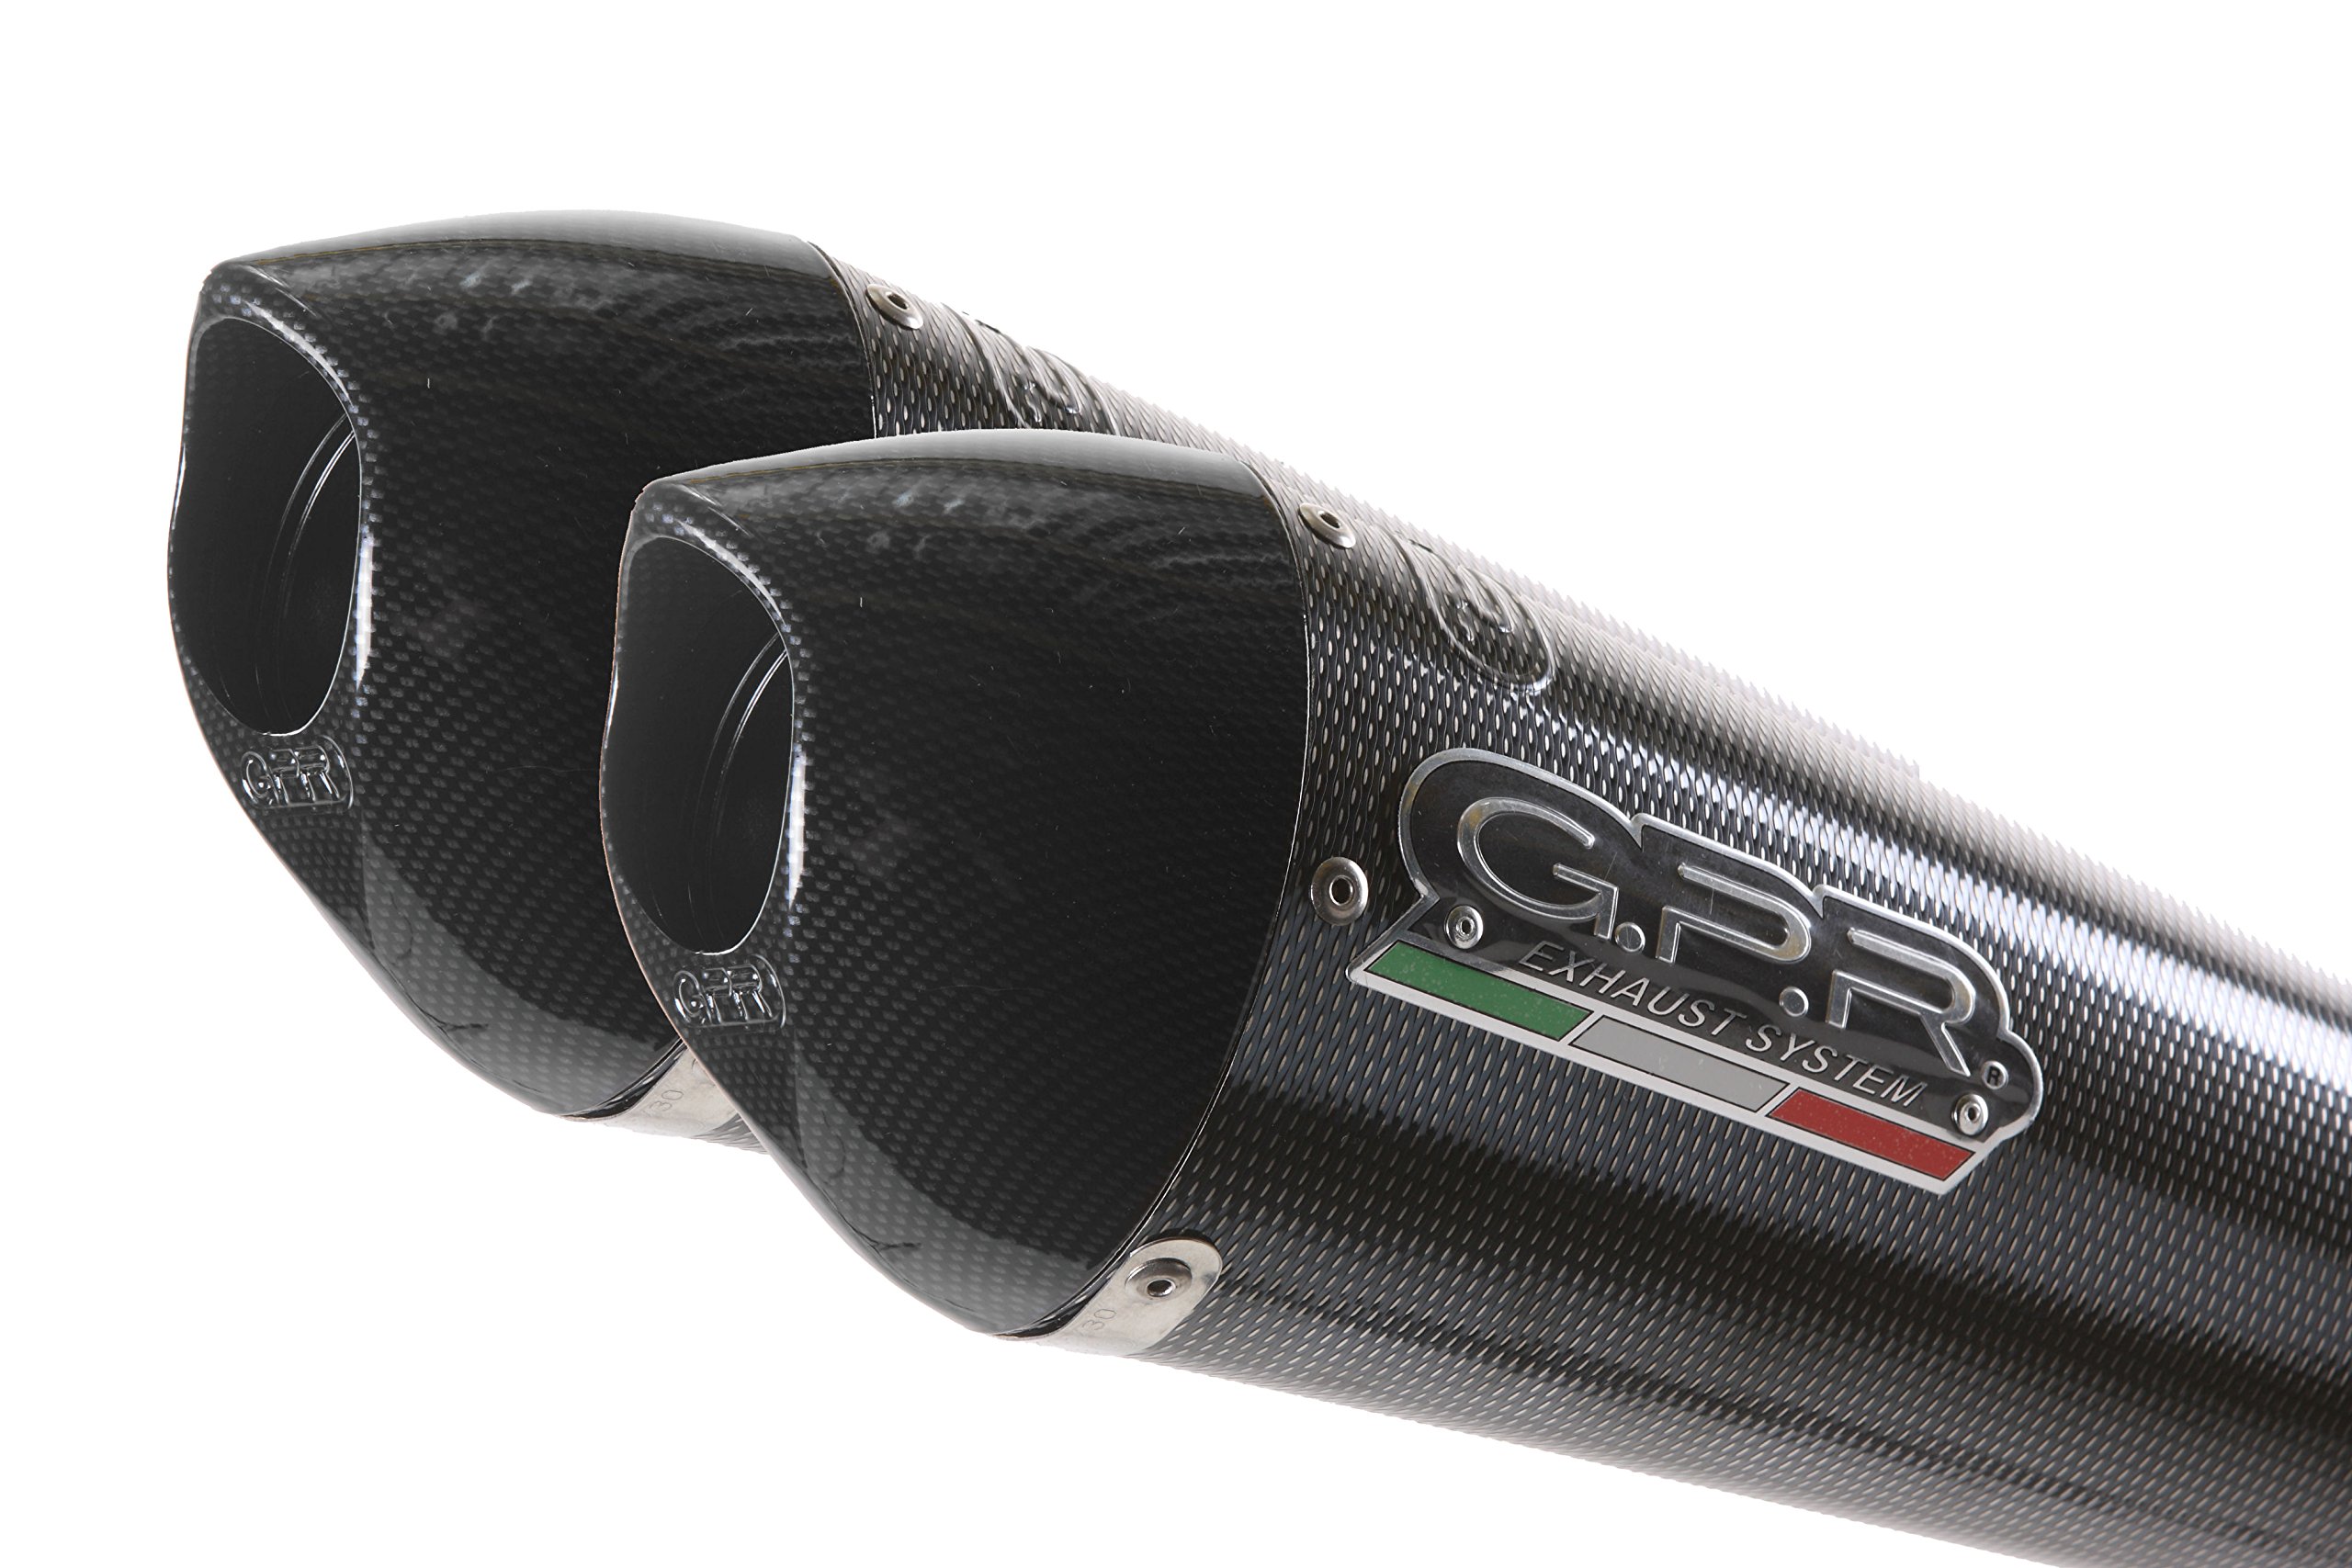 GPR Auspuff Endkappe – kompatibel mit KTM LC8 Supermoto 2005/08 Dual HOMOLOGATED Bolt Exhaust System with Catalyst by GPR Exhaust Systems der EVO Poppy Line